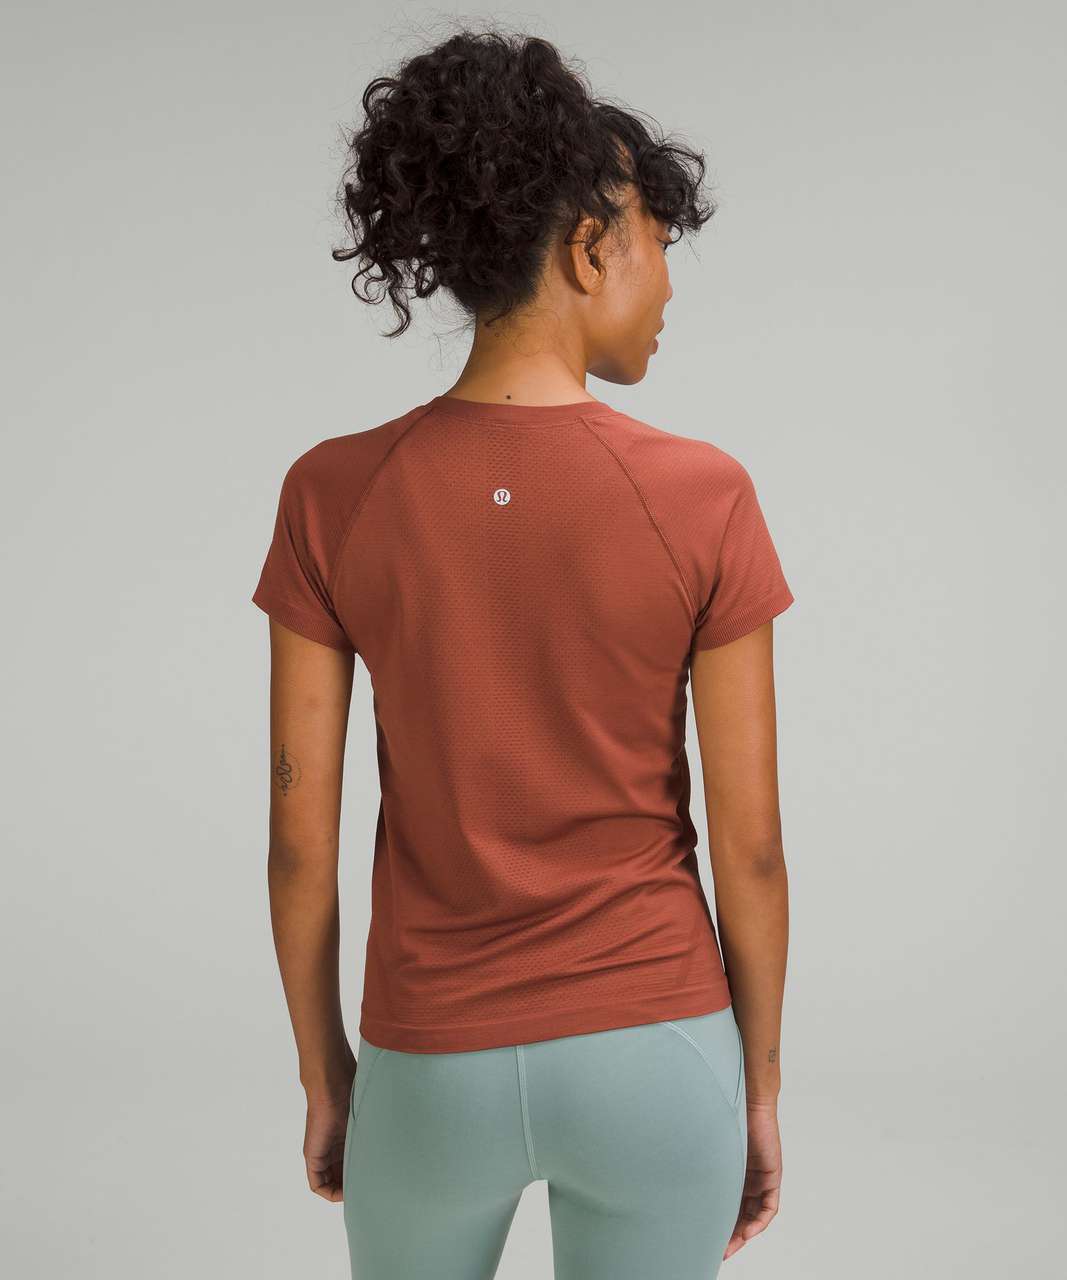 Lululemon Swiftly Tech Short Sleeve Shirt 2.0 *Race Length